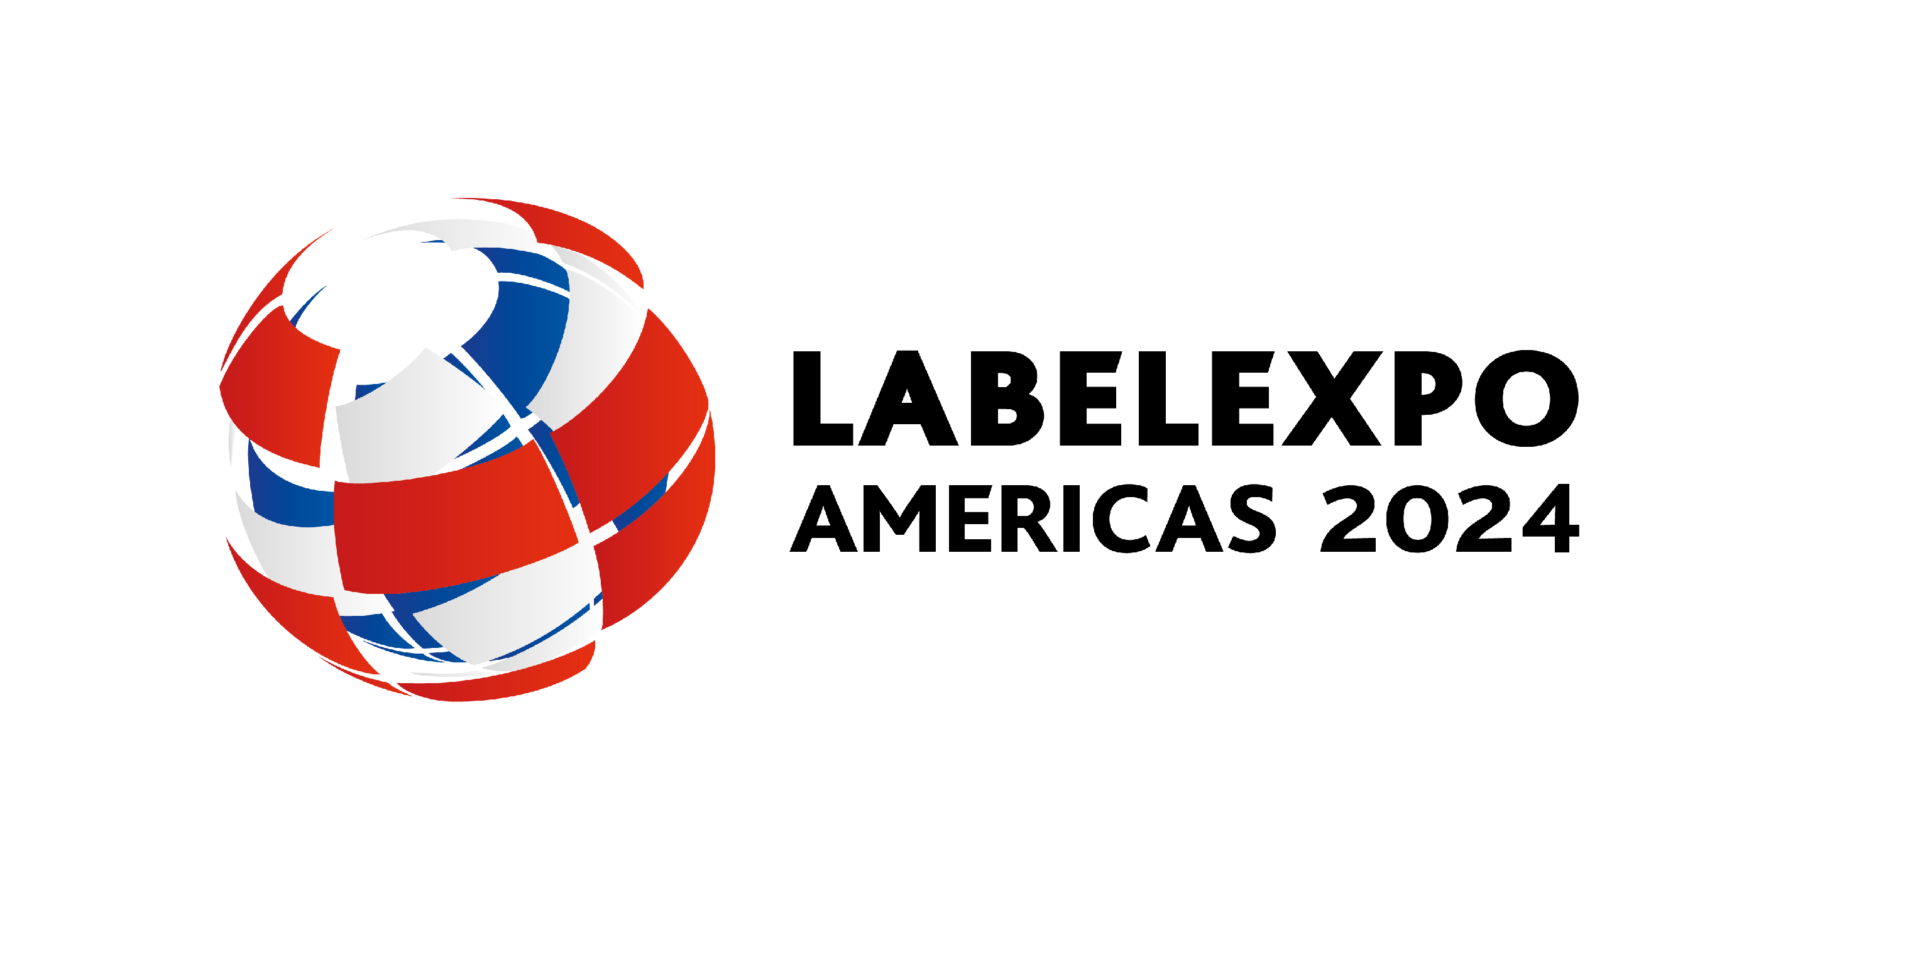 labelexpo americas 2024 logo horizontal black nodate nourl